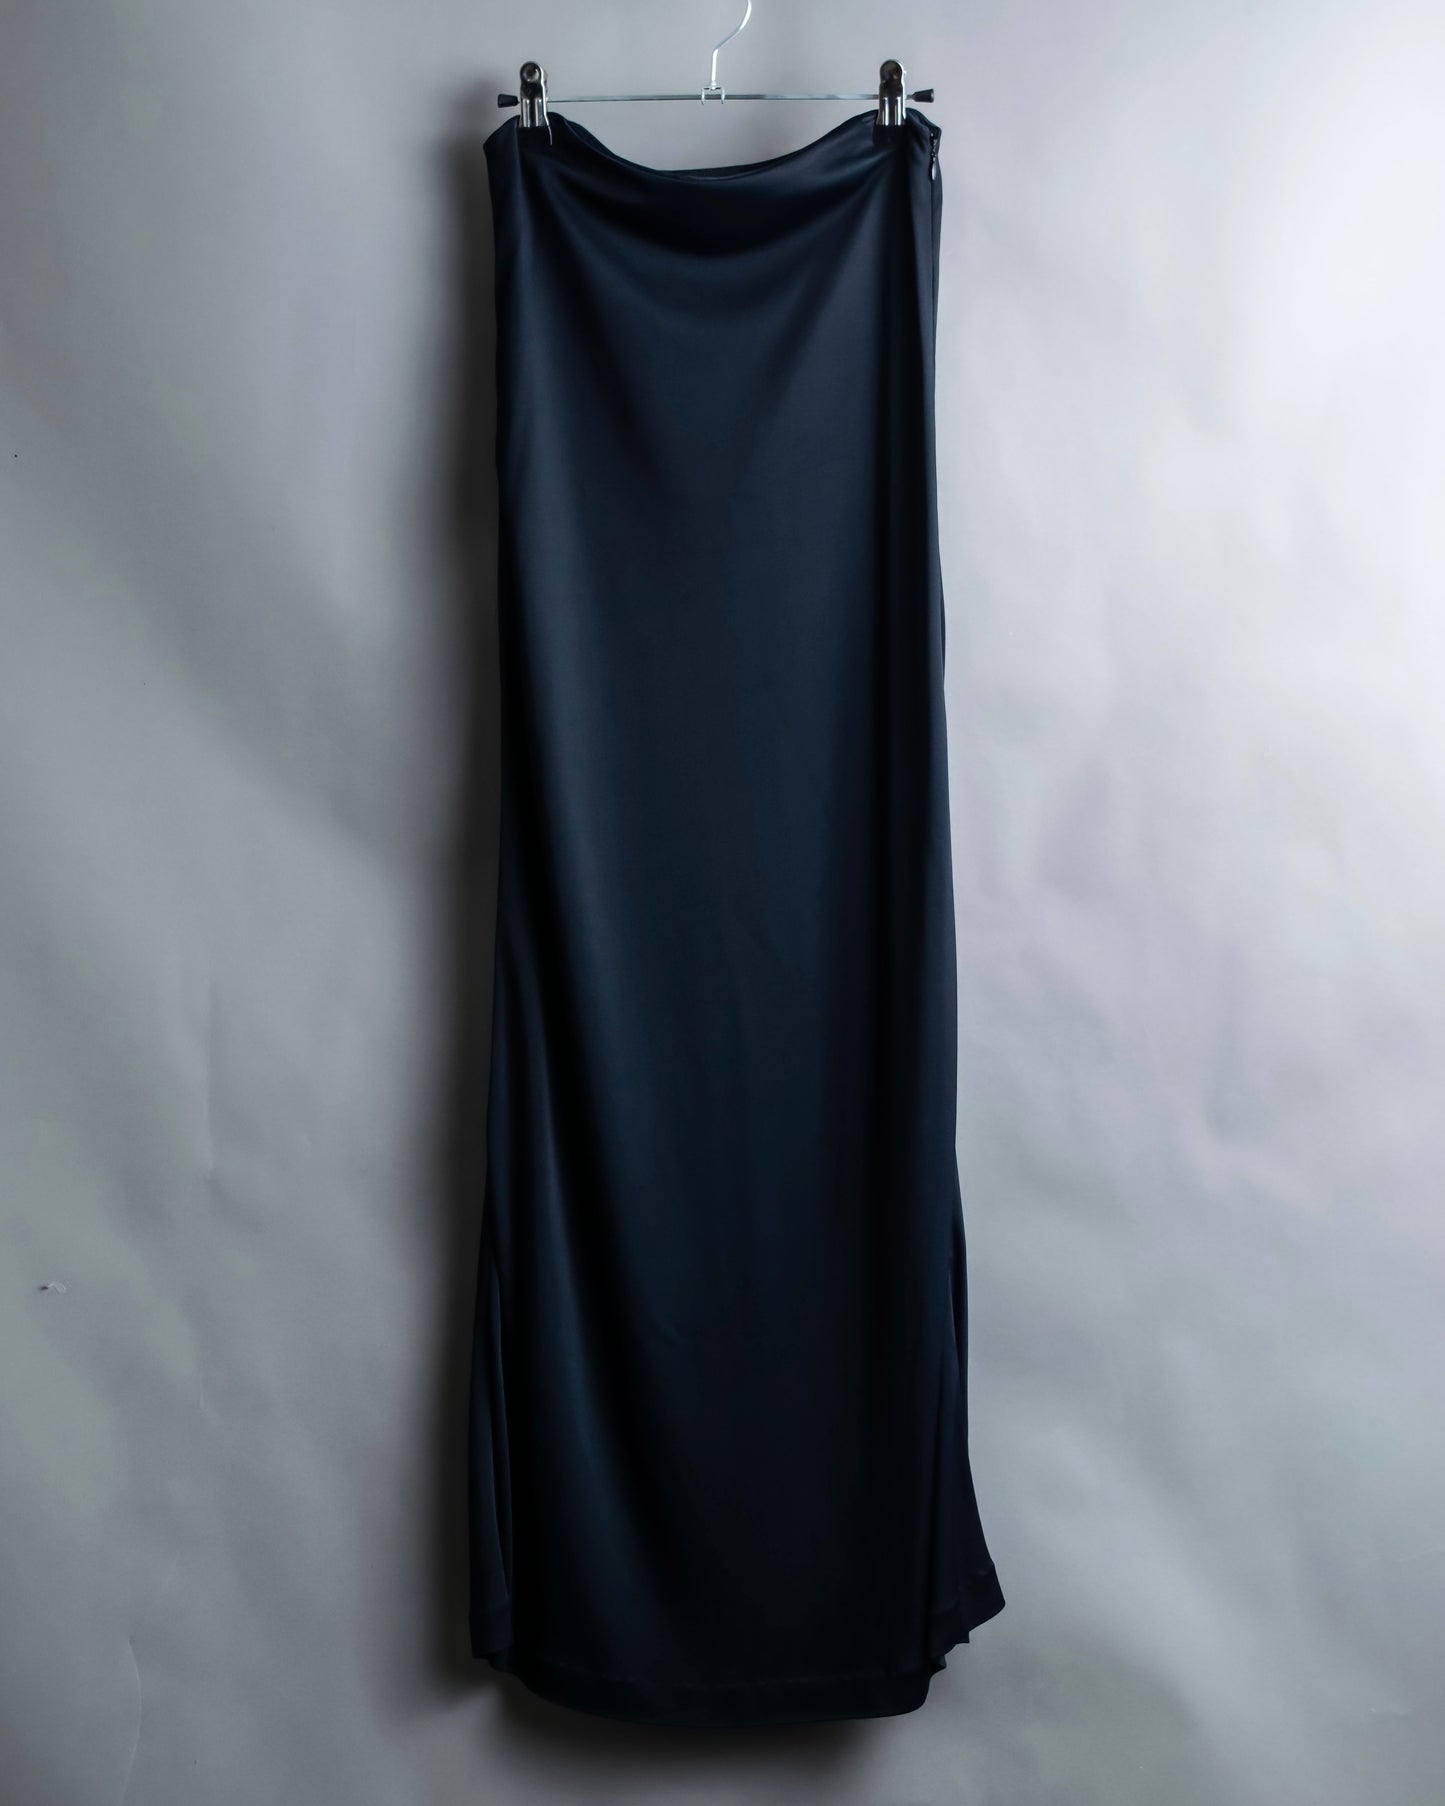 "GUCCI"

Maxi-length glossy rayon skirt